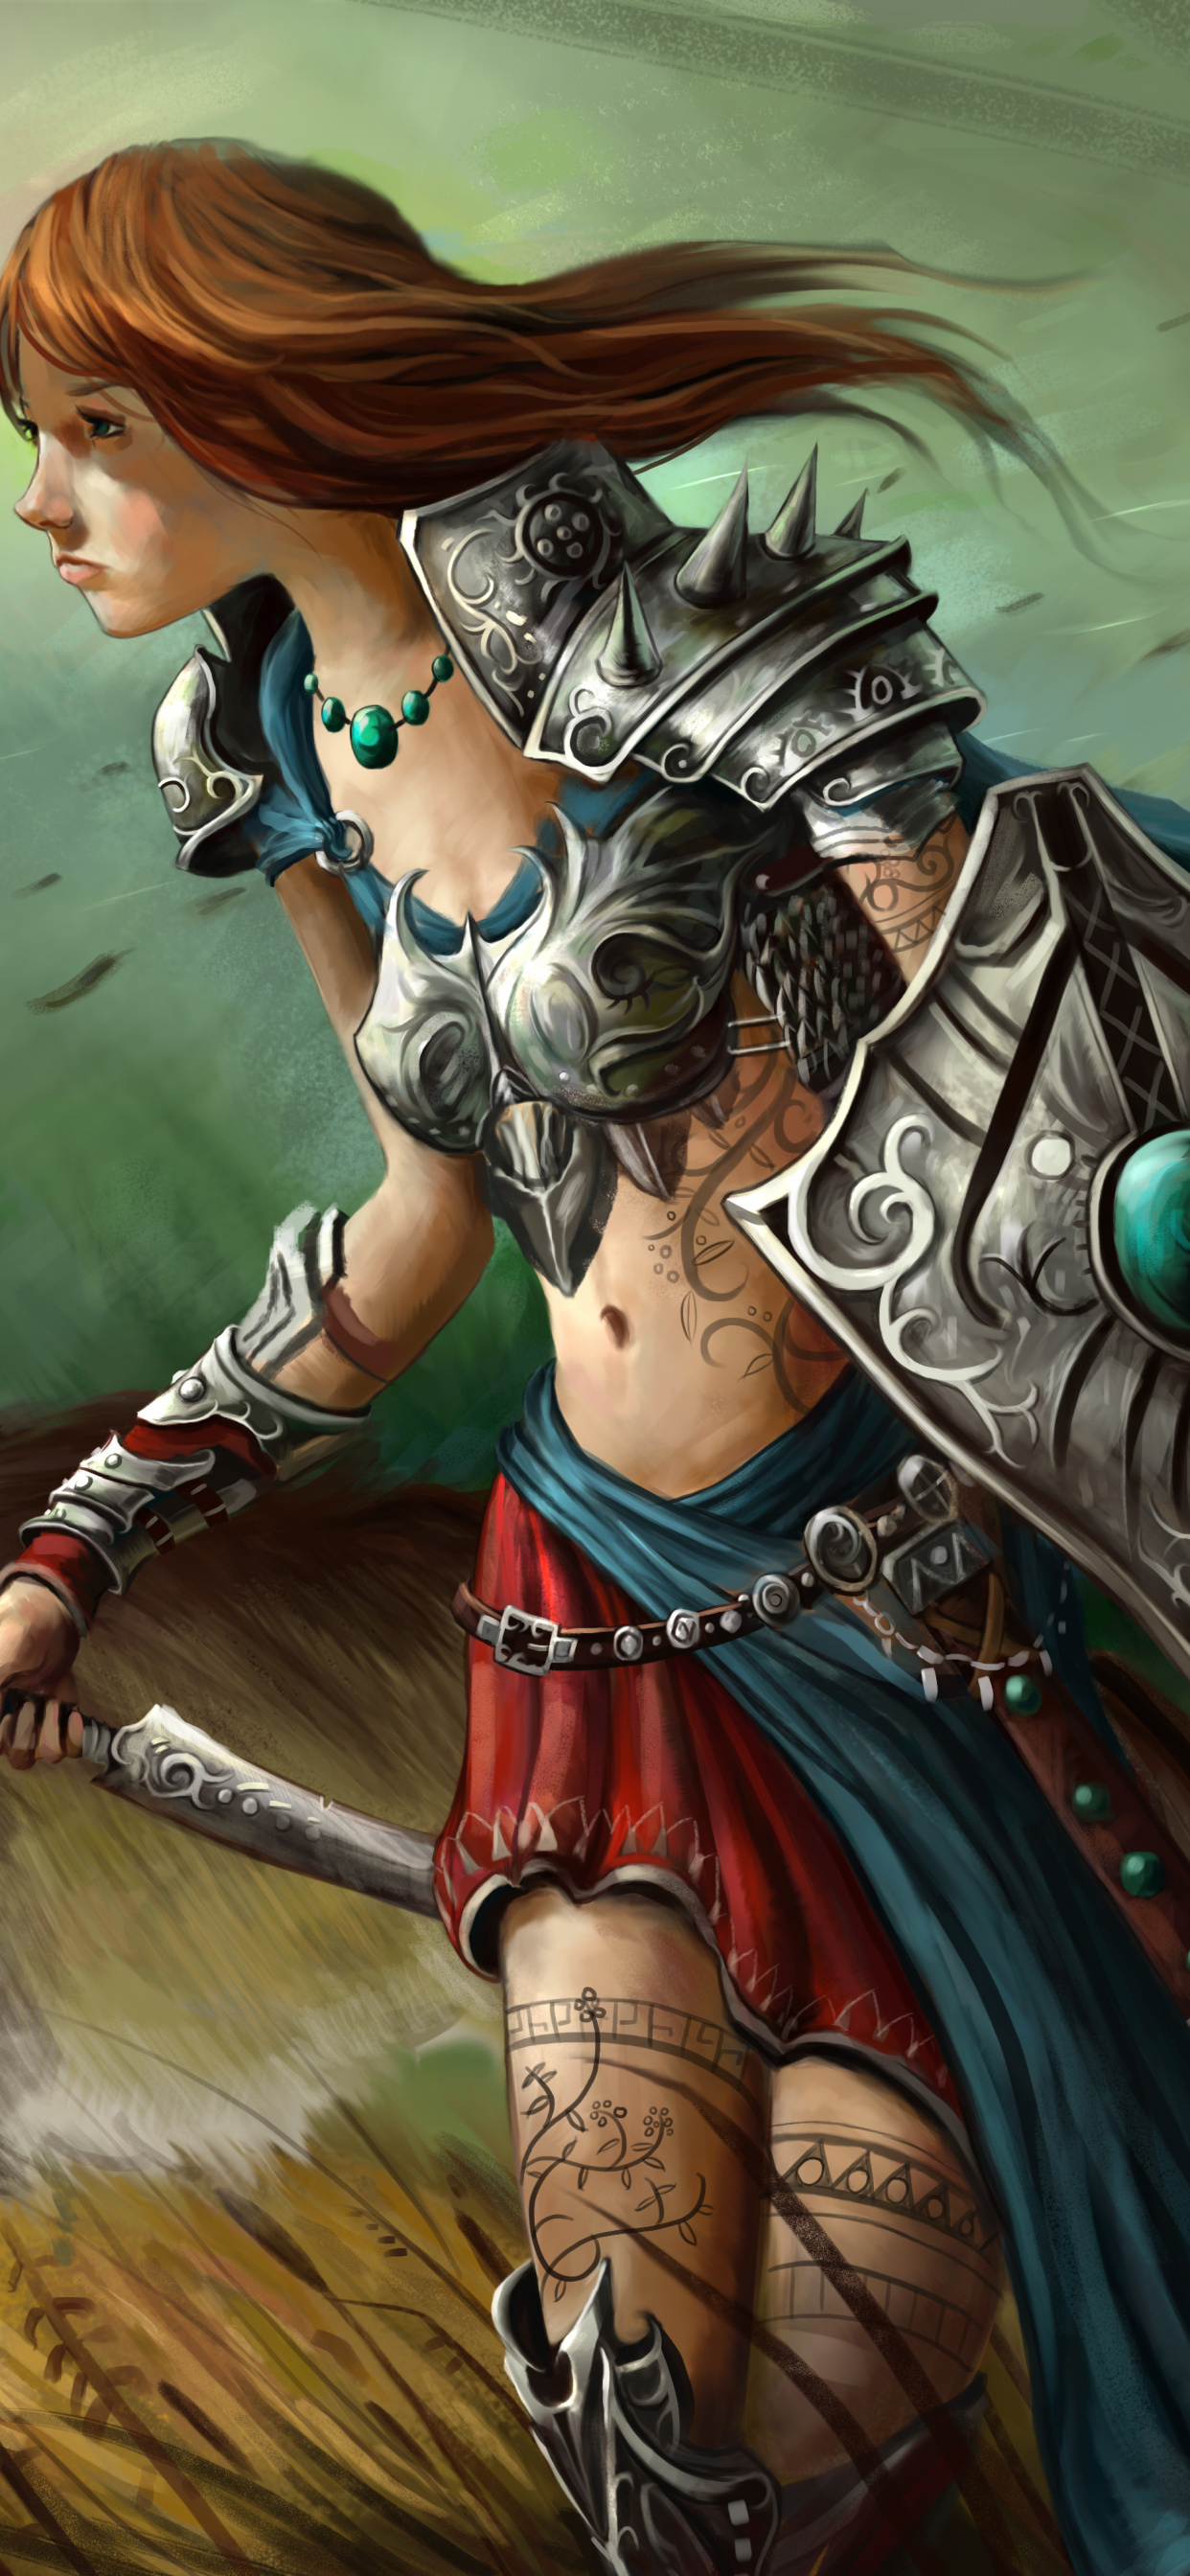 Download 1242x2688 Wallpaper Warrior, Illustration, Fantasy, Female